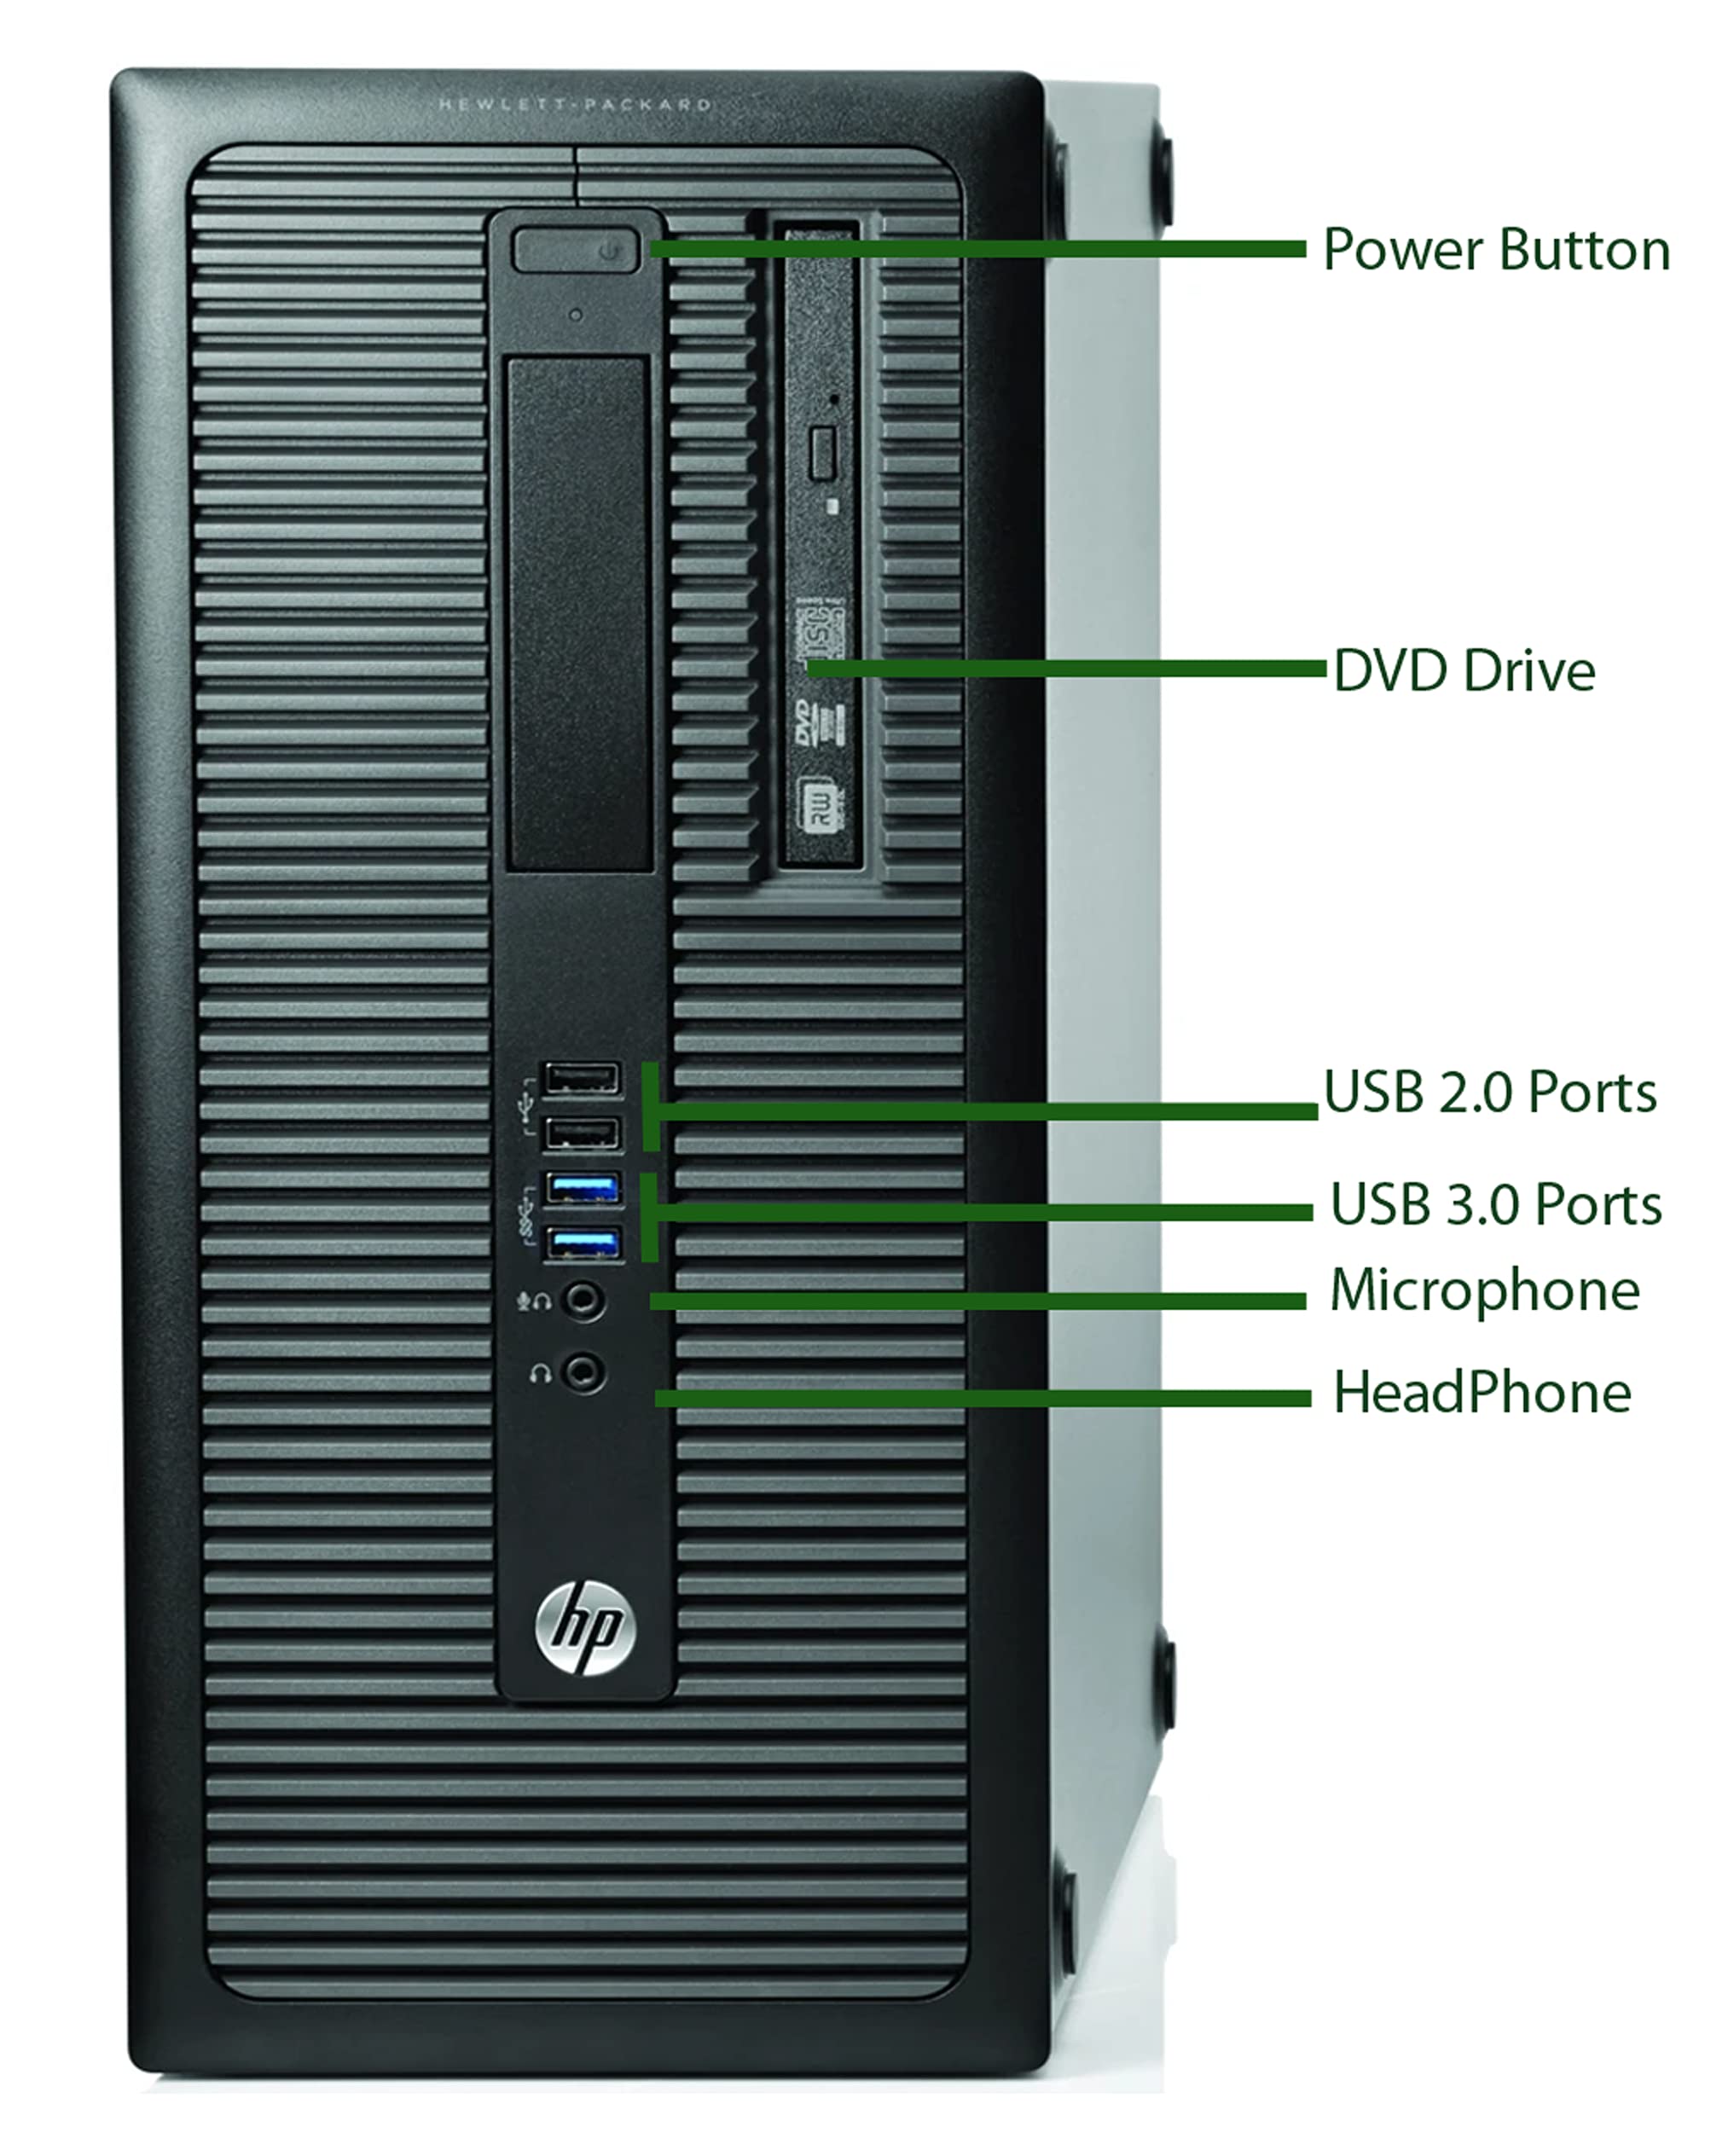 HP EliteDesk 800 G1 Tower Computer Desktop PC, Intel Core i7 3.4GHz Processor, 16GB Ram, 512GB M.2 SSD, WiFi & Bluetooth, HDMI, NVIDIA GT 1030 2GB DDR5, Windows 10 Pro (Renewed)